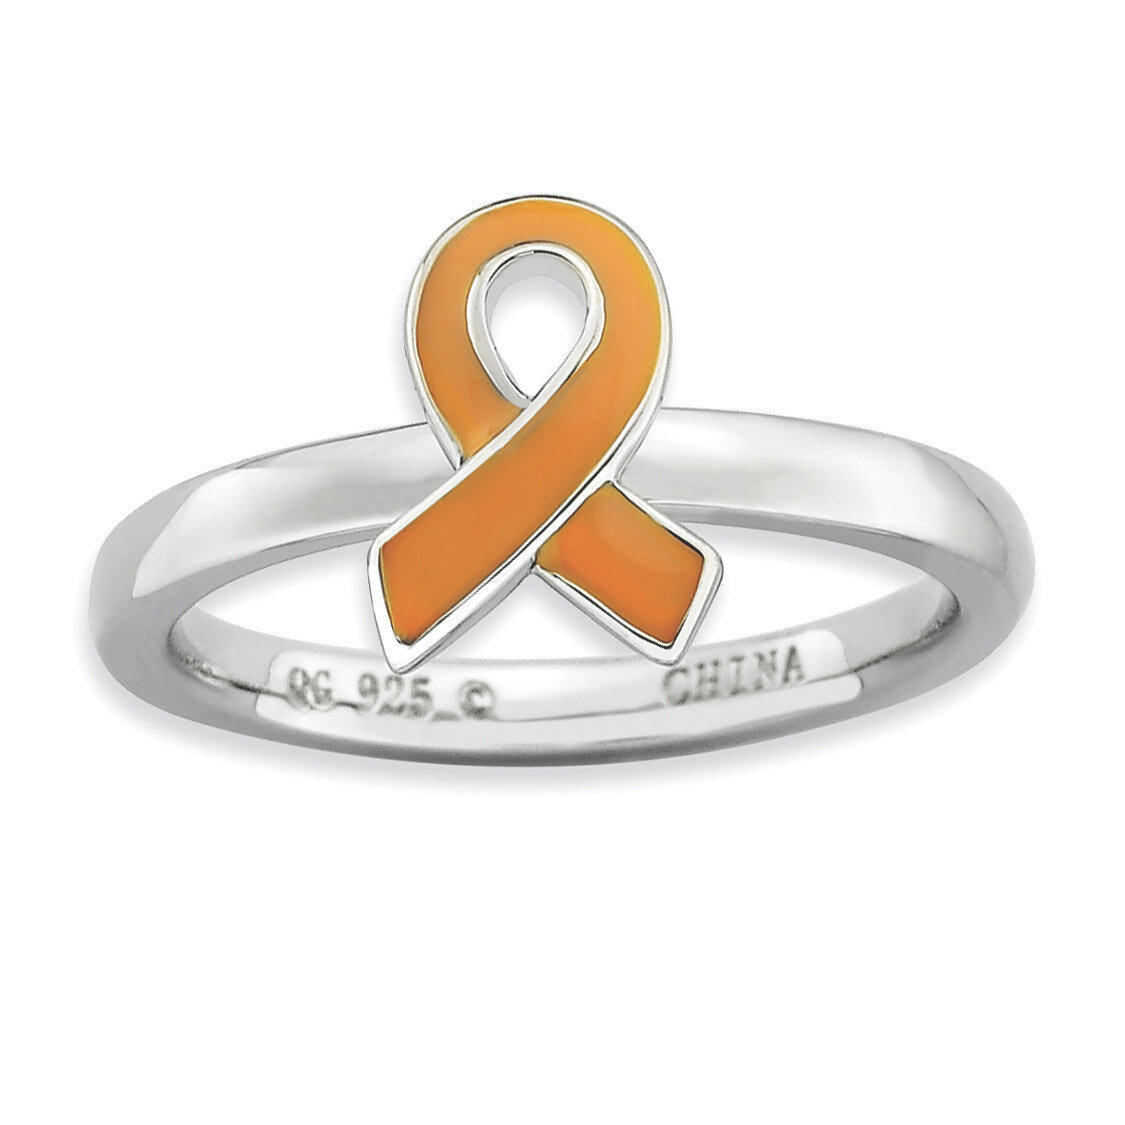 Orange Enameled Awareness Ribbon Ring - Sterling Silver QSK945